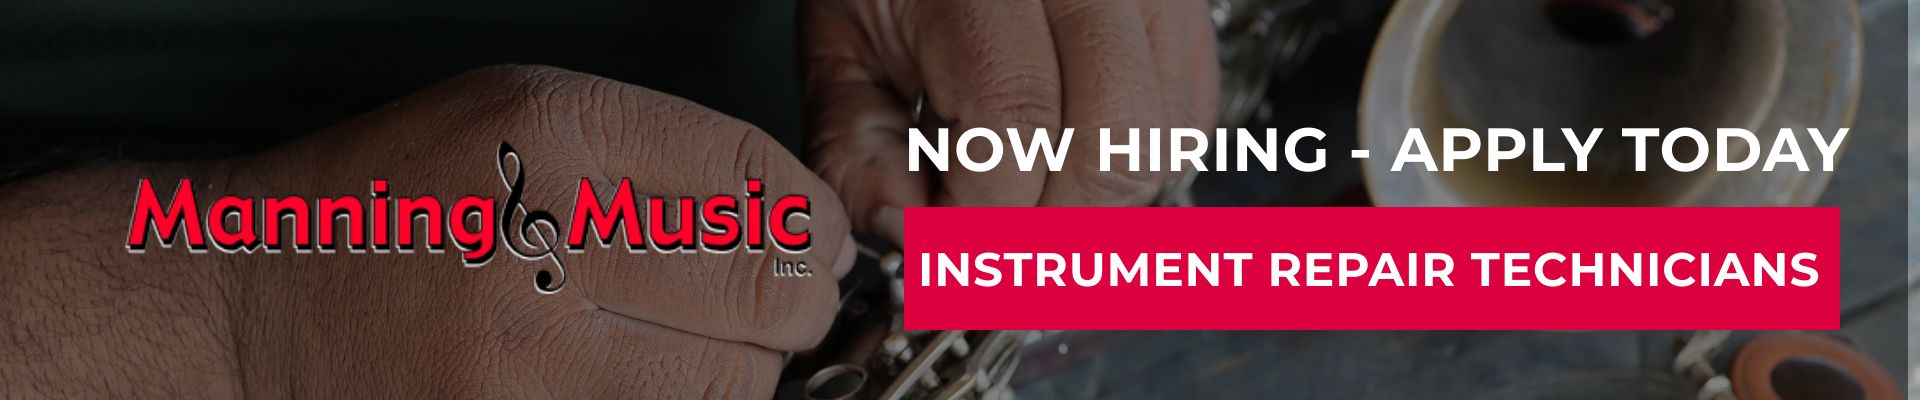 Manning Music Instrument Repair Technician Posting